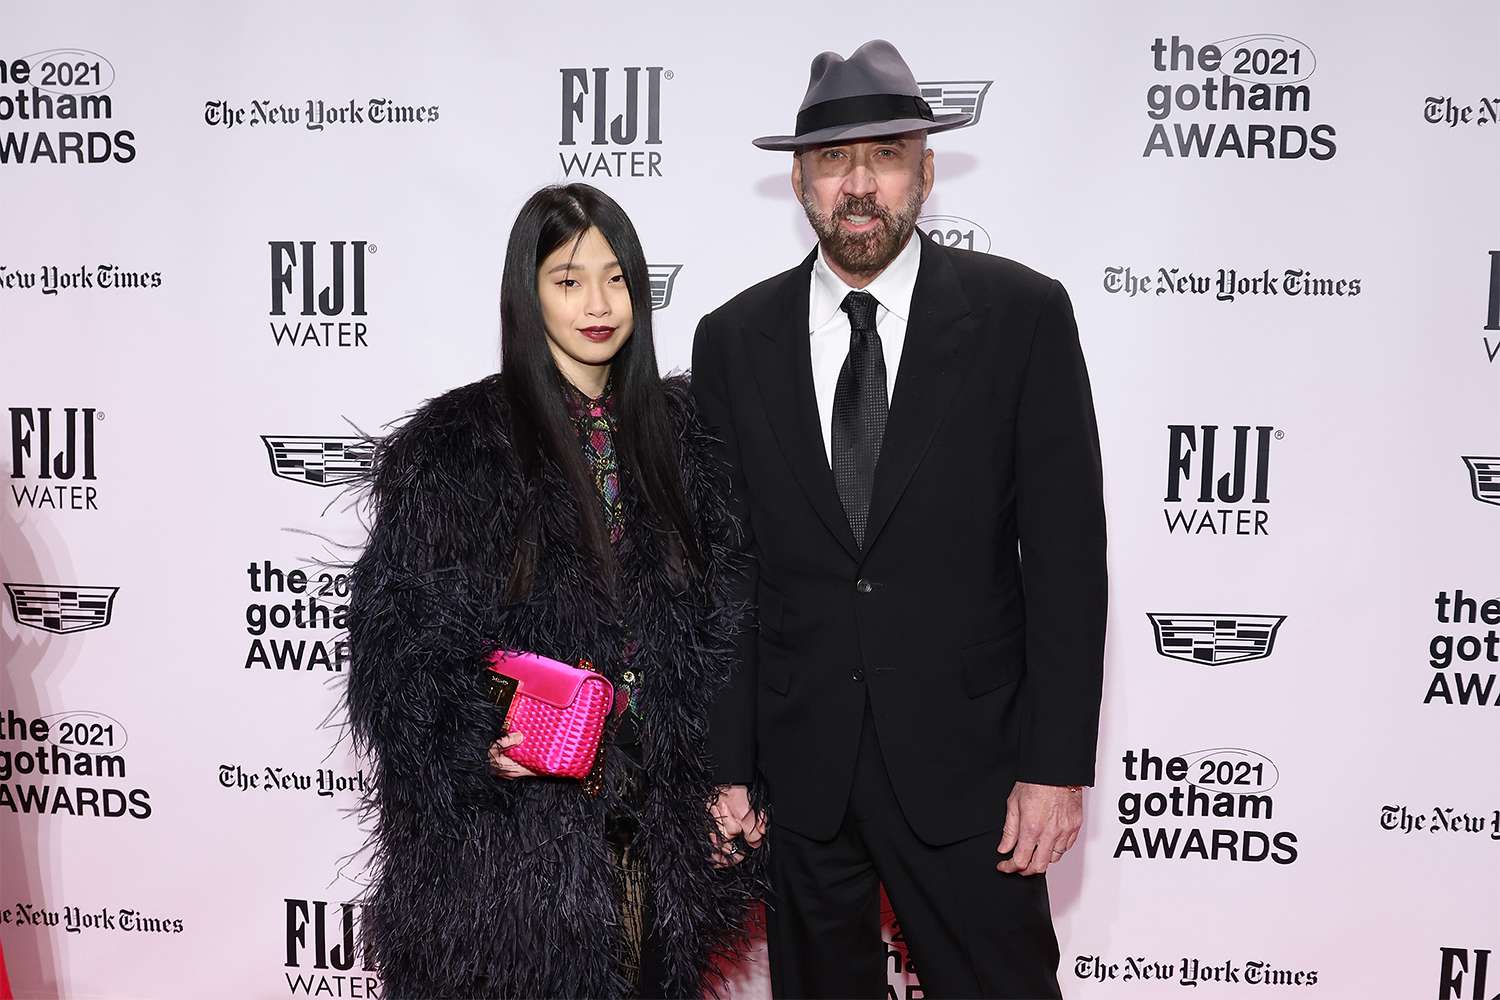 Nicolas Cage Attends Gotham Awards with Wife Riko Shibata